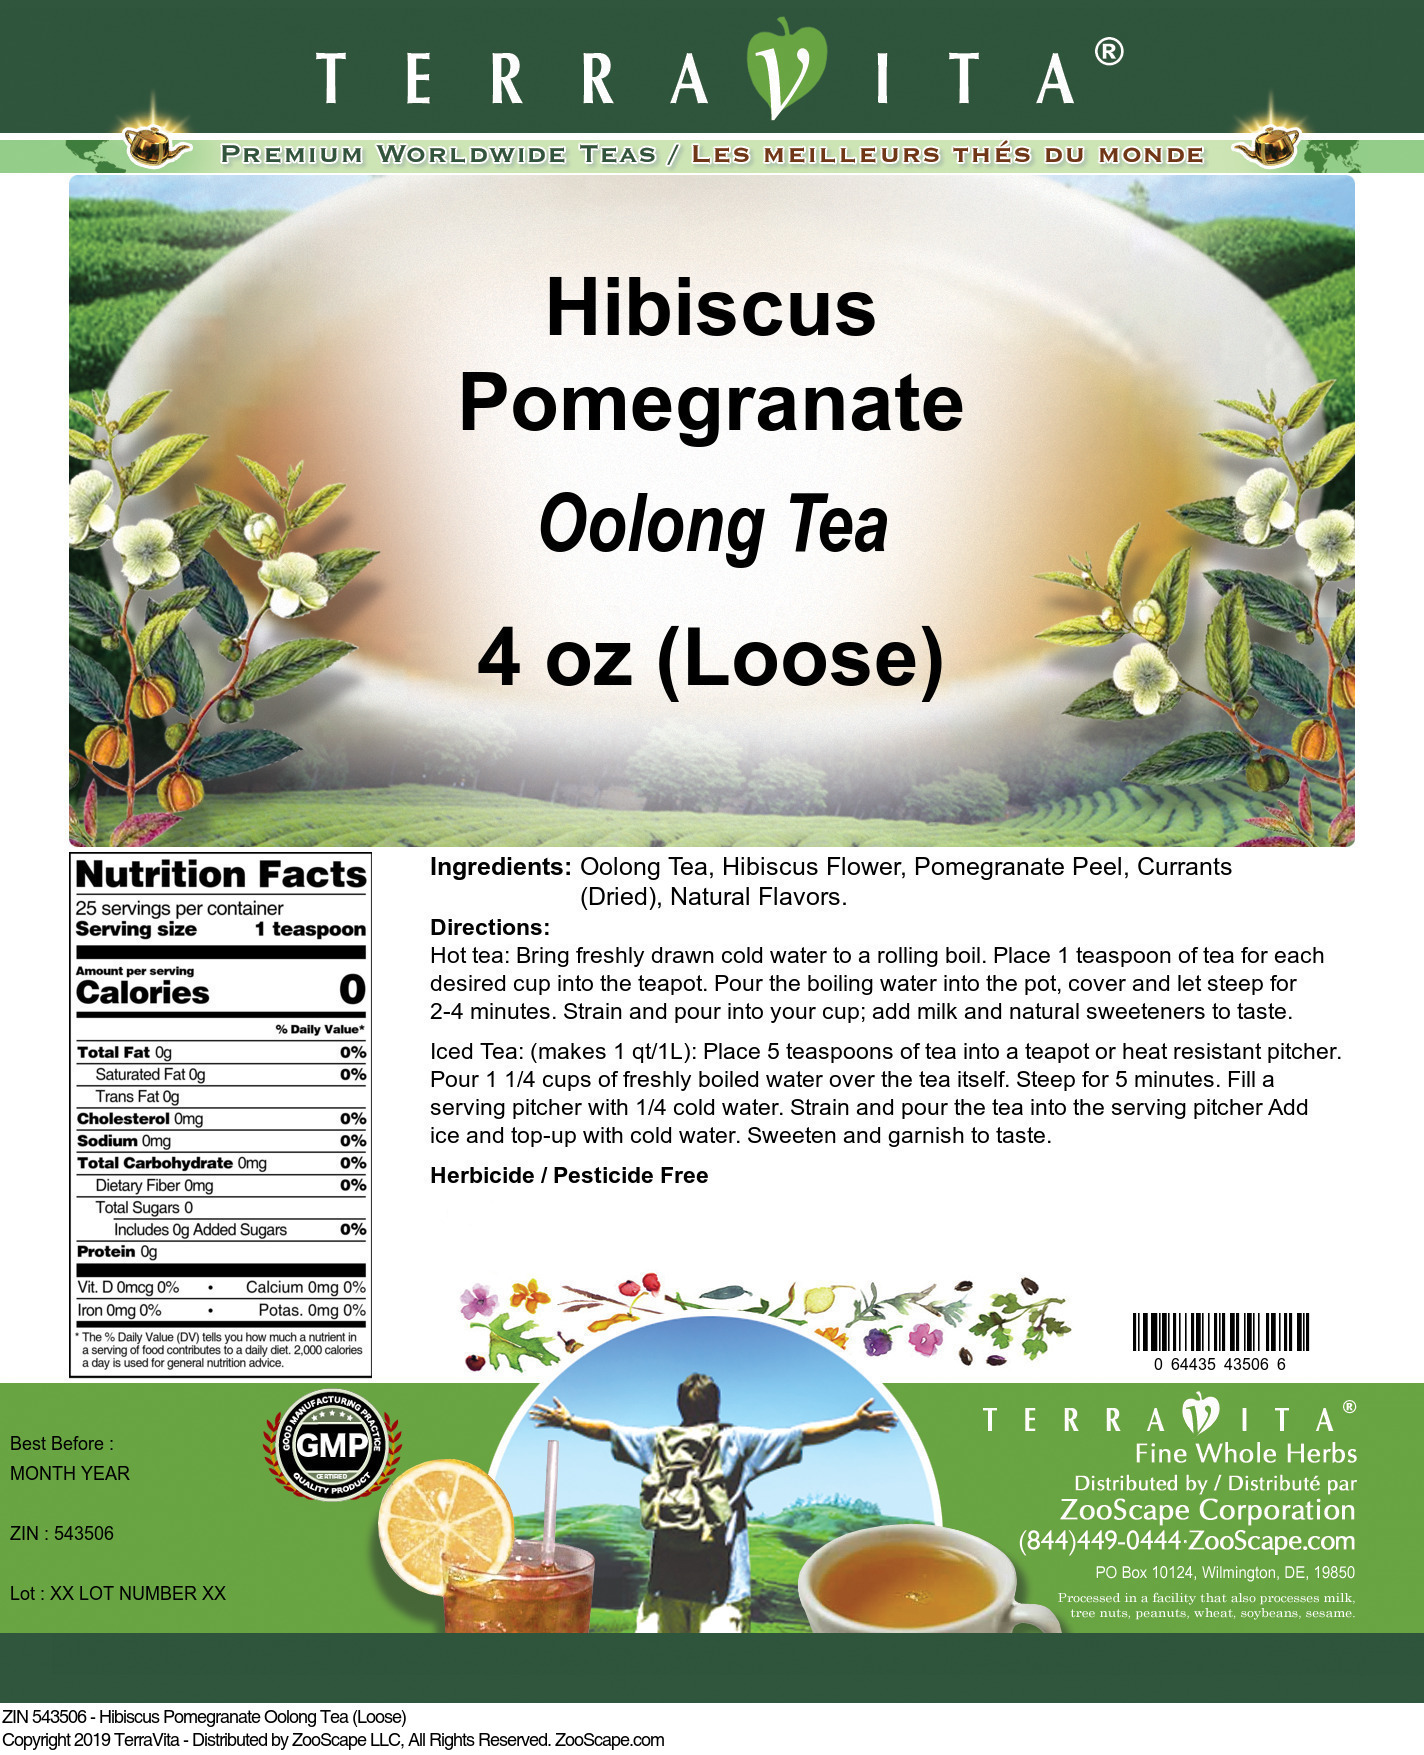 Hibiscus Pomegranate Oolong Tea (Loose) - Label